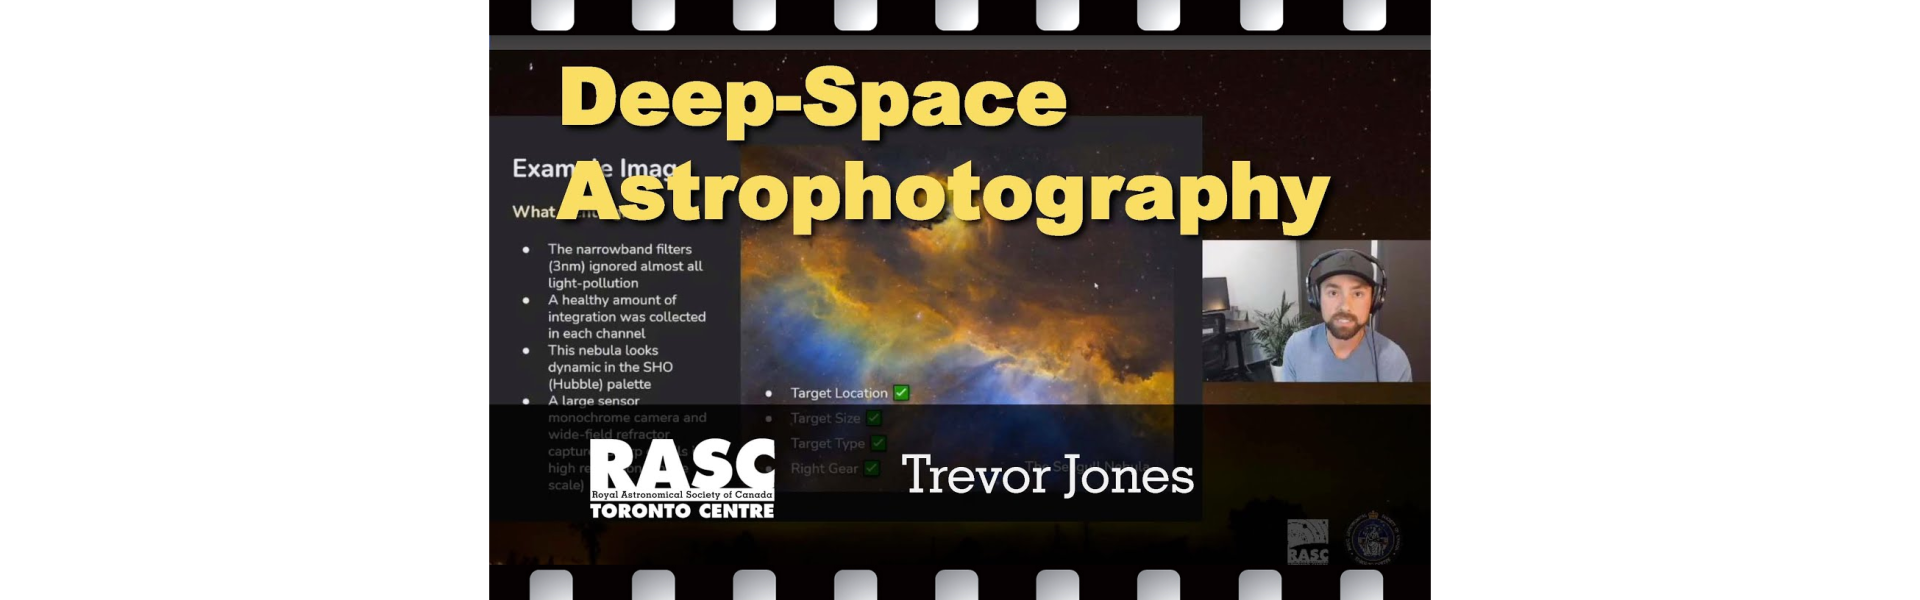 Deep Space Astrophotography with Trevor Jones from astrobackyard.com